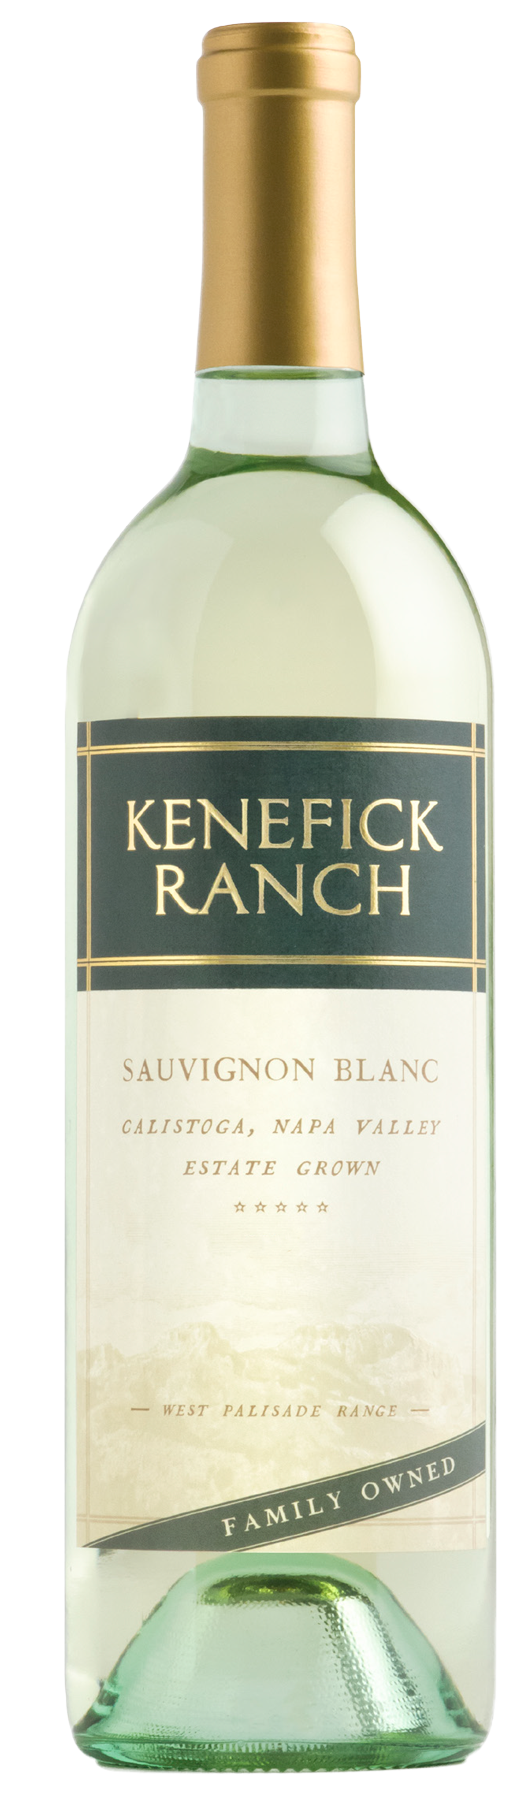 Kenefick Ranch Sauvignon Blanc 2013